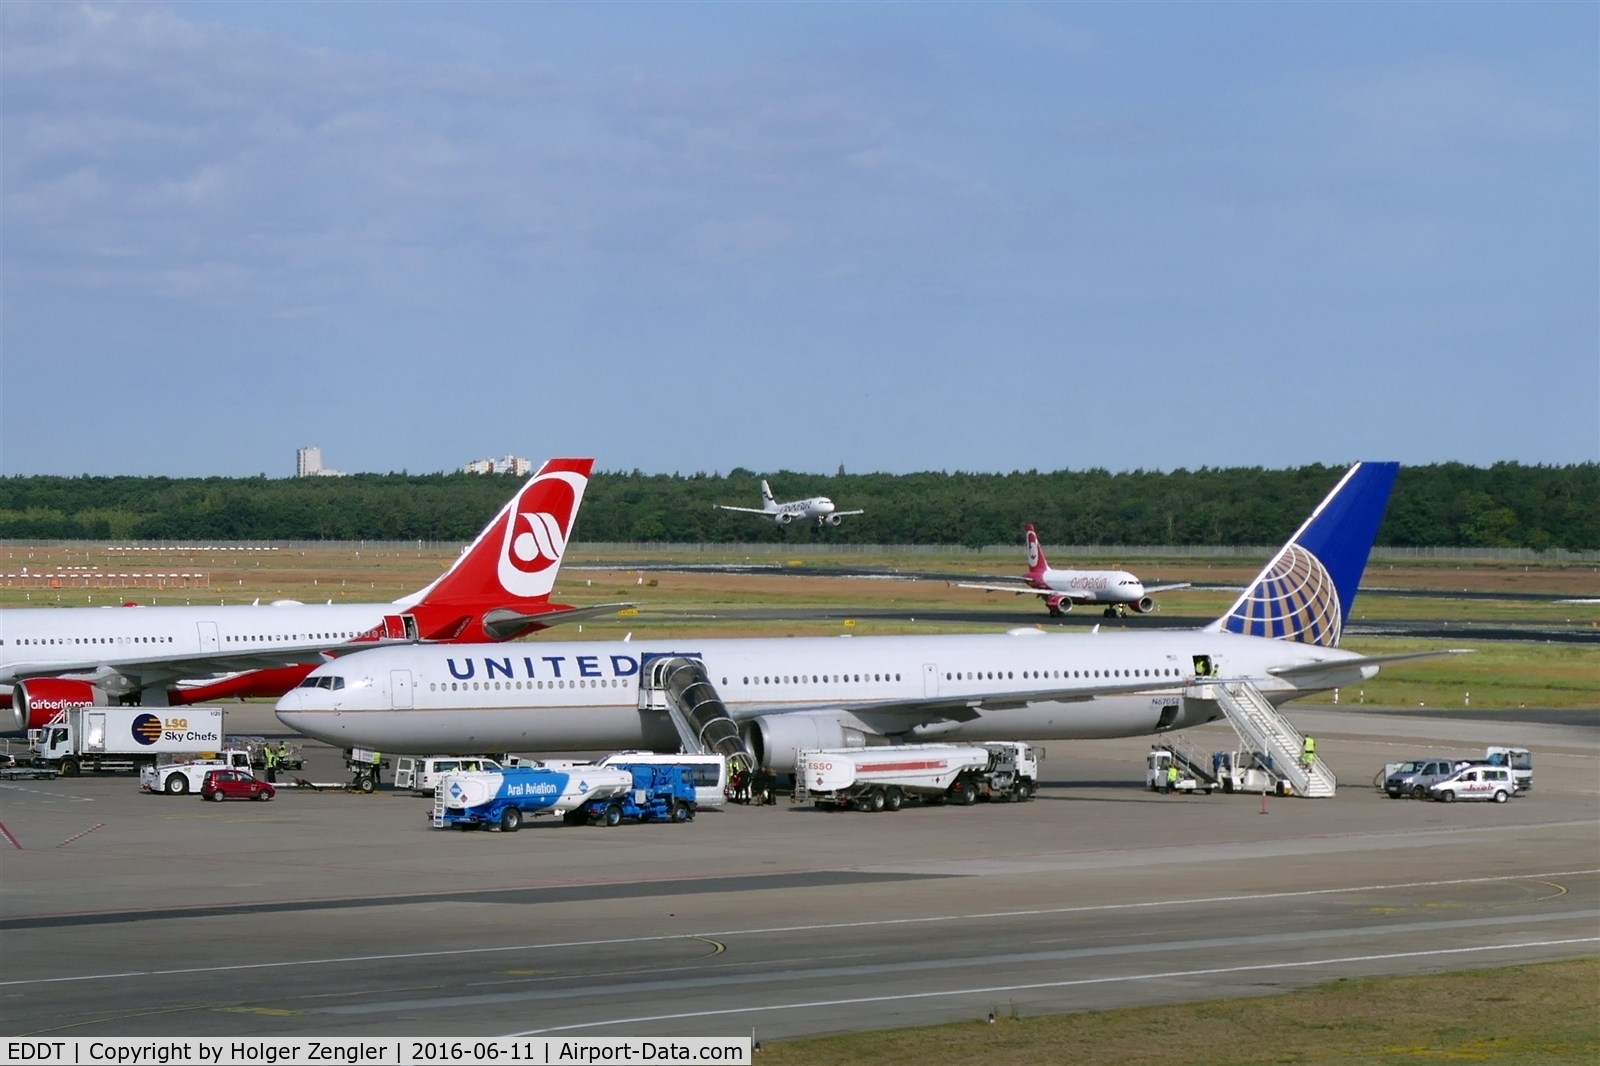 Tegel International Airport (closing in 2011), Berlin Germany (EDDT) - TXL waving good bye tour no.4 since 2011